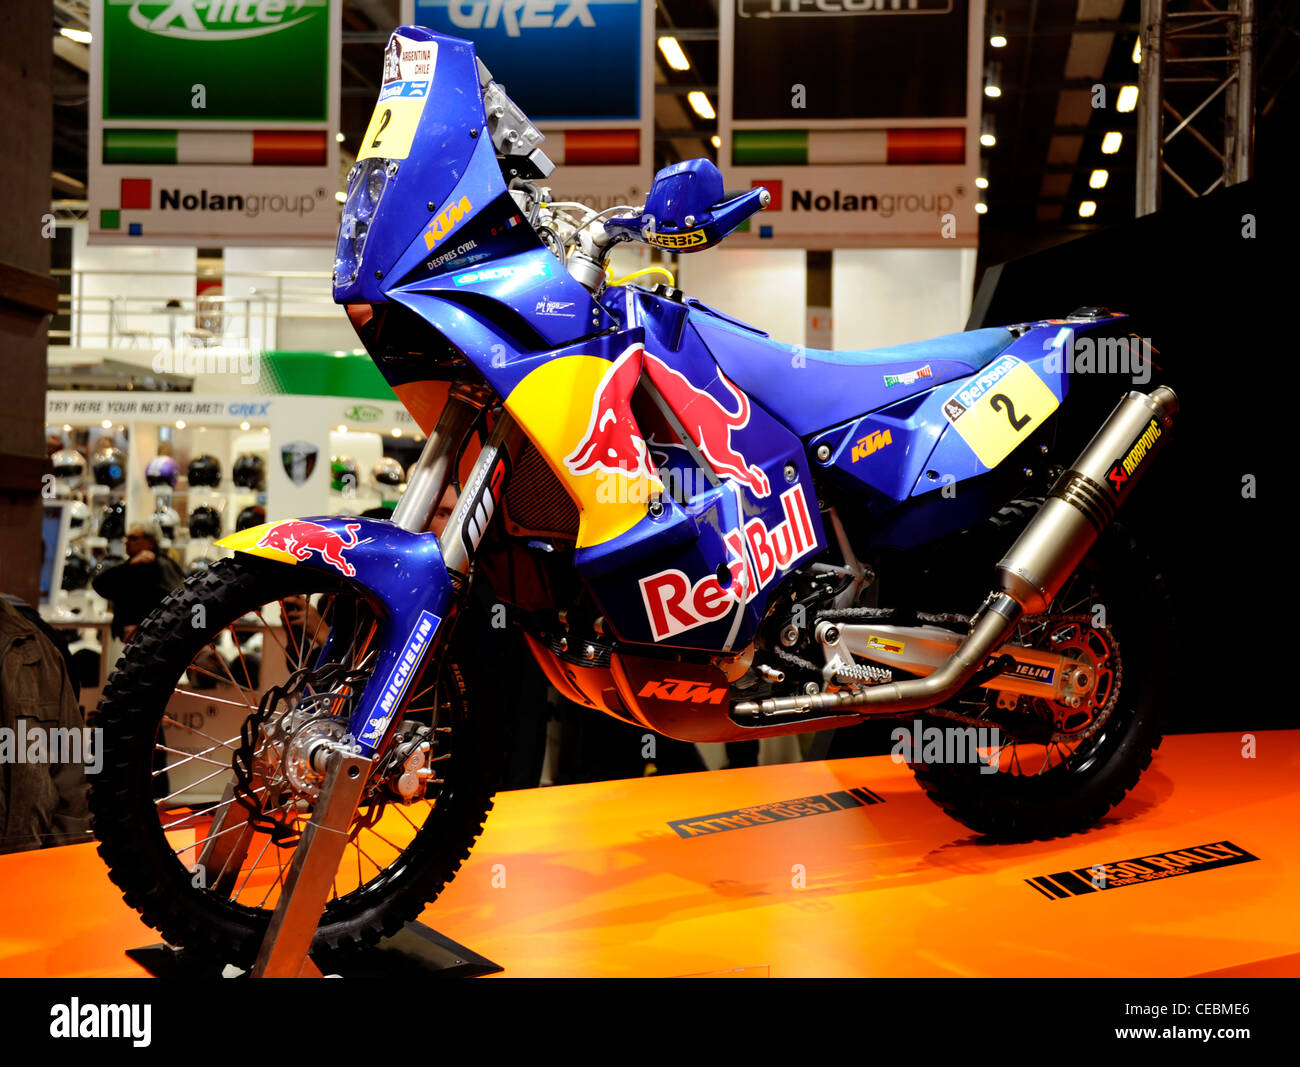 KTM 450 Rally Paris-Dakar, Red Bull, Österreich, Paris Motorrad Show,  Frankreich Stockfotografie - Alamy